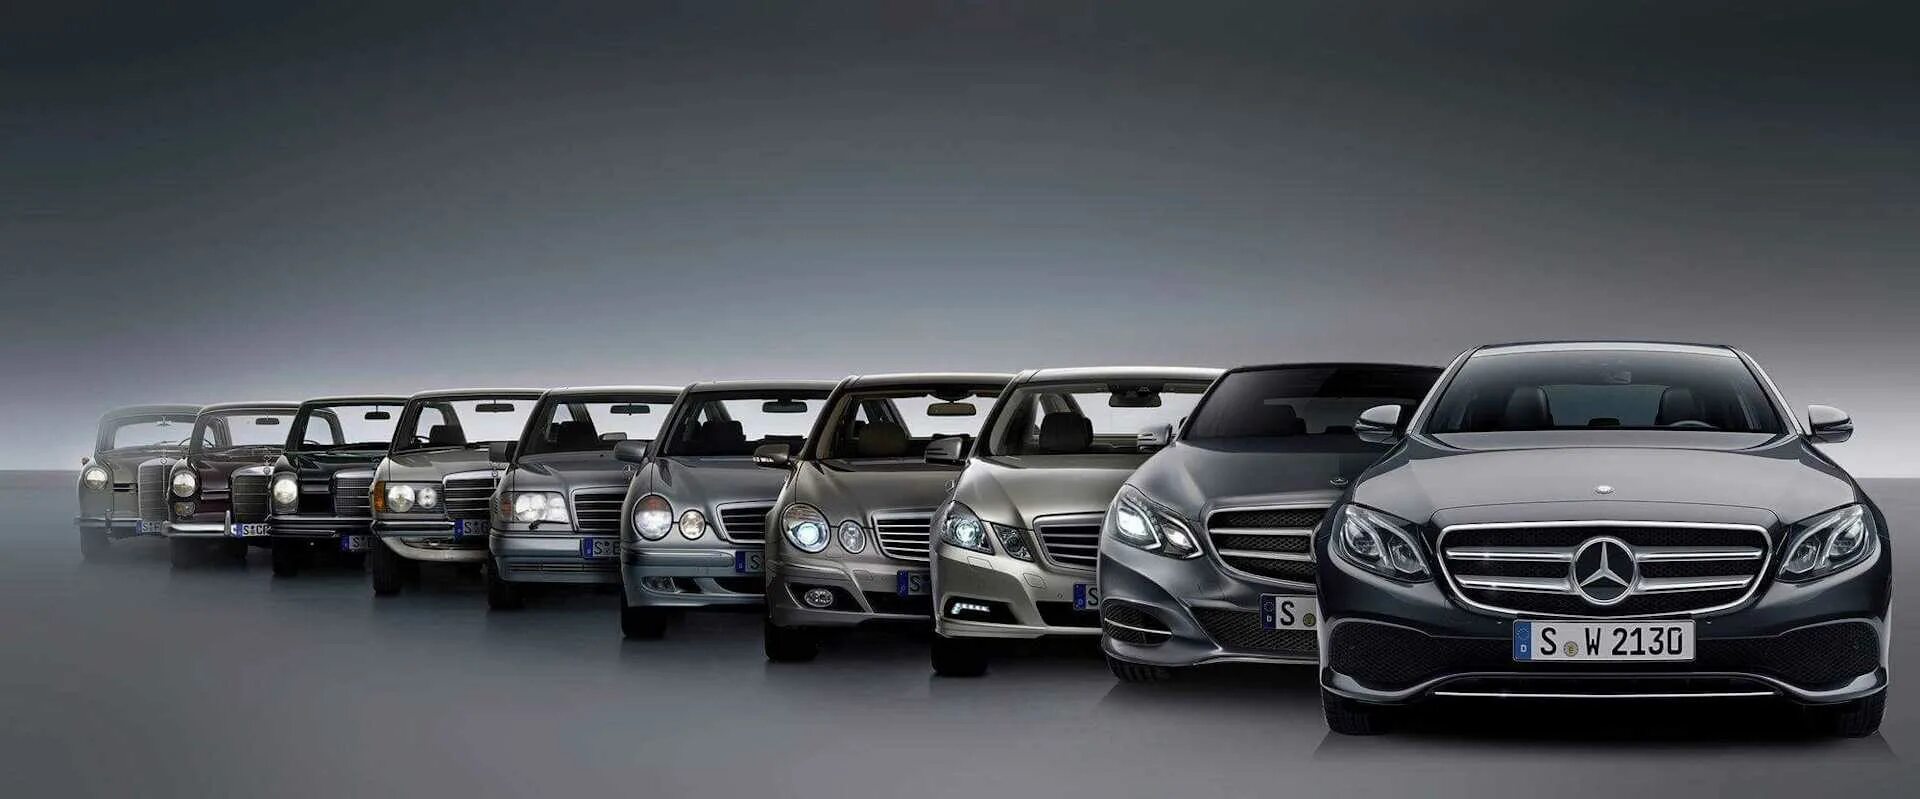 Виды мерсов. Эволюция Mercedes Benz е class. Мерседес s500 Эволюция. Поколение Mercedes Benz w212. Эволюция Мерседес Бенц s класс.